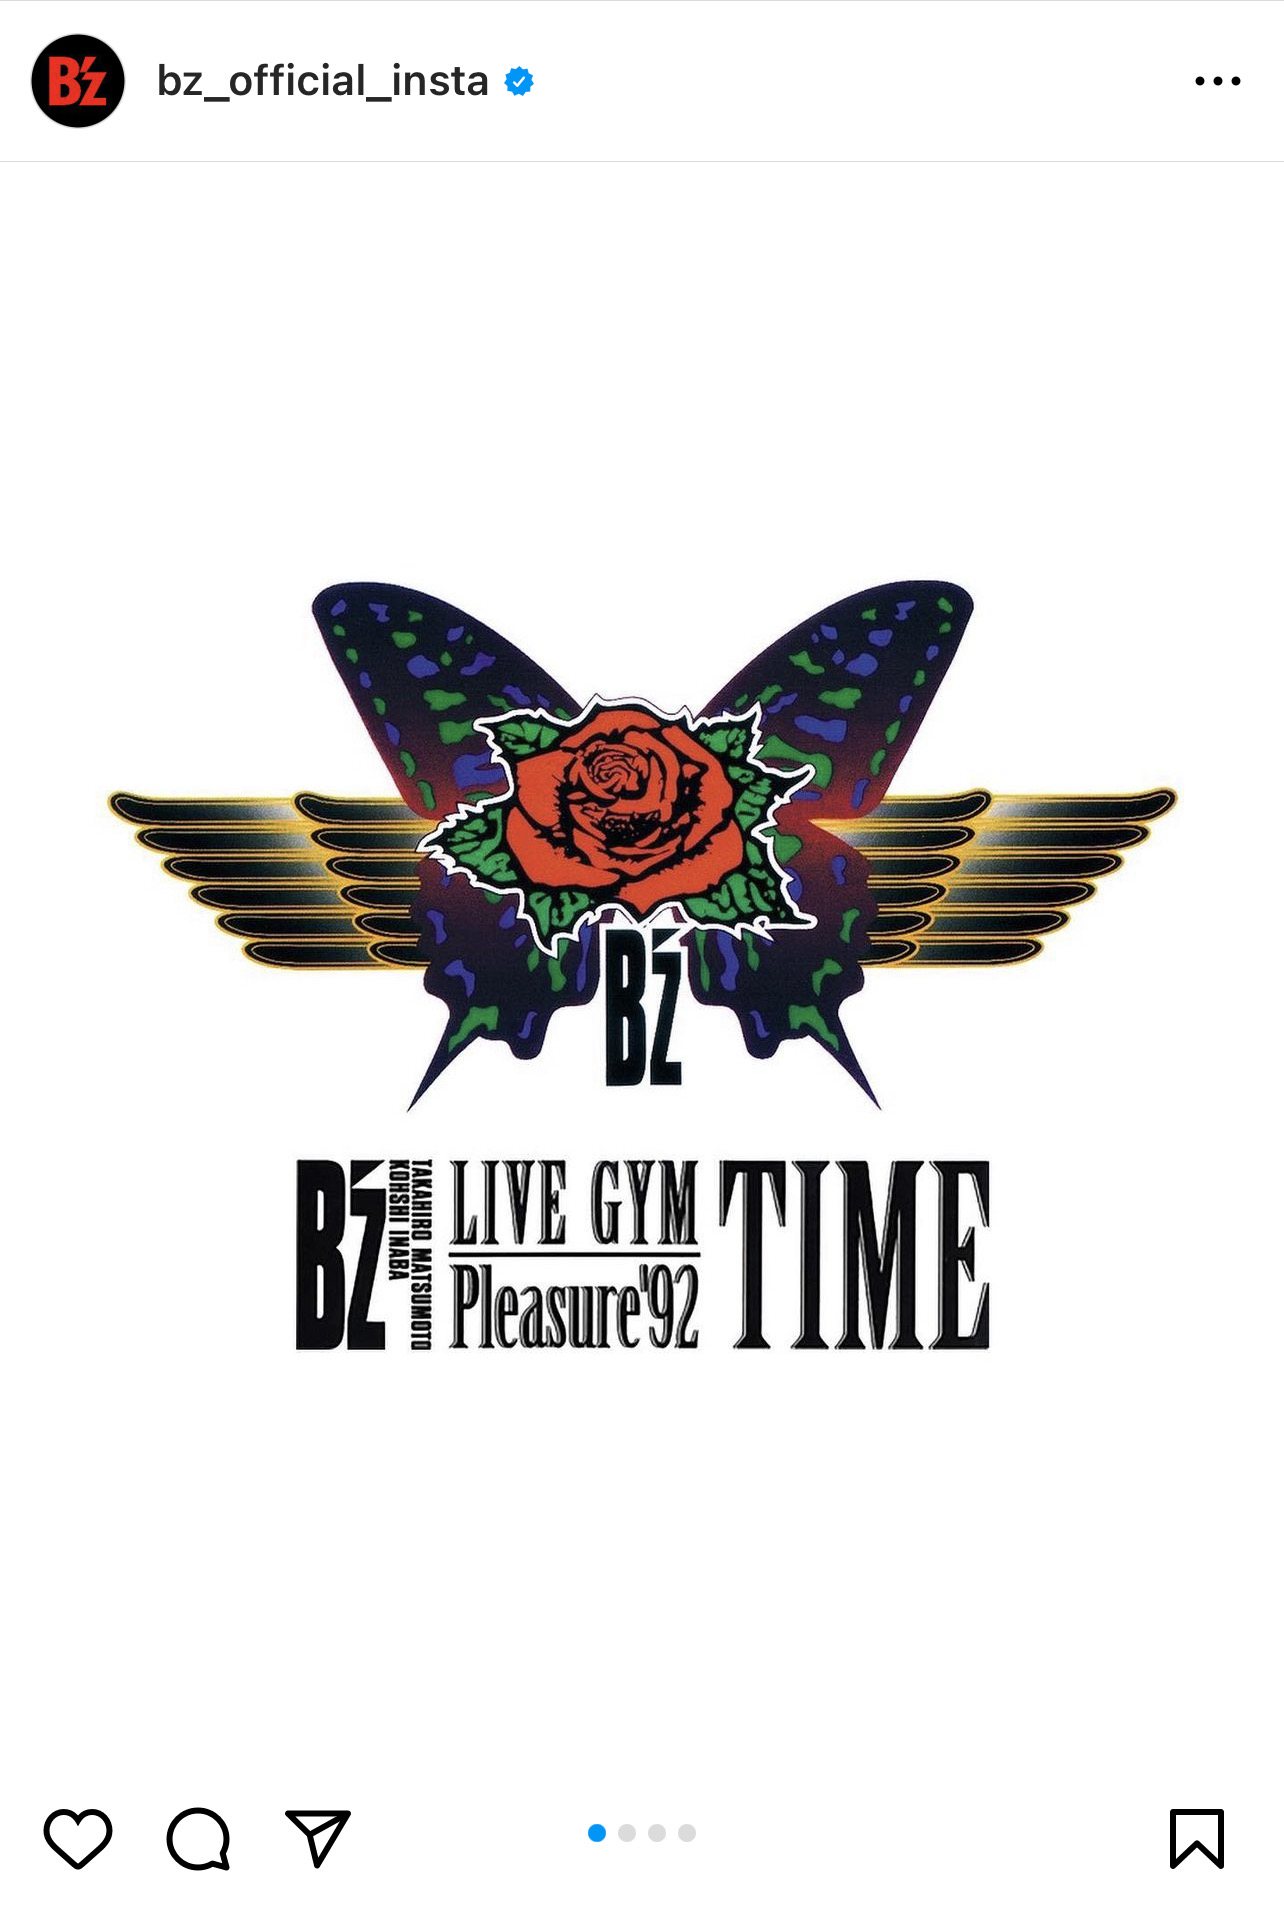 B'zデビュー35周年記念で公開された『B'z LIVE-GYM Pleasure '92』のツアーロゴ画像